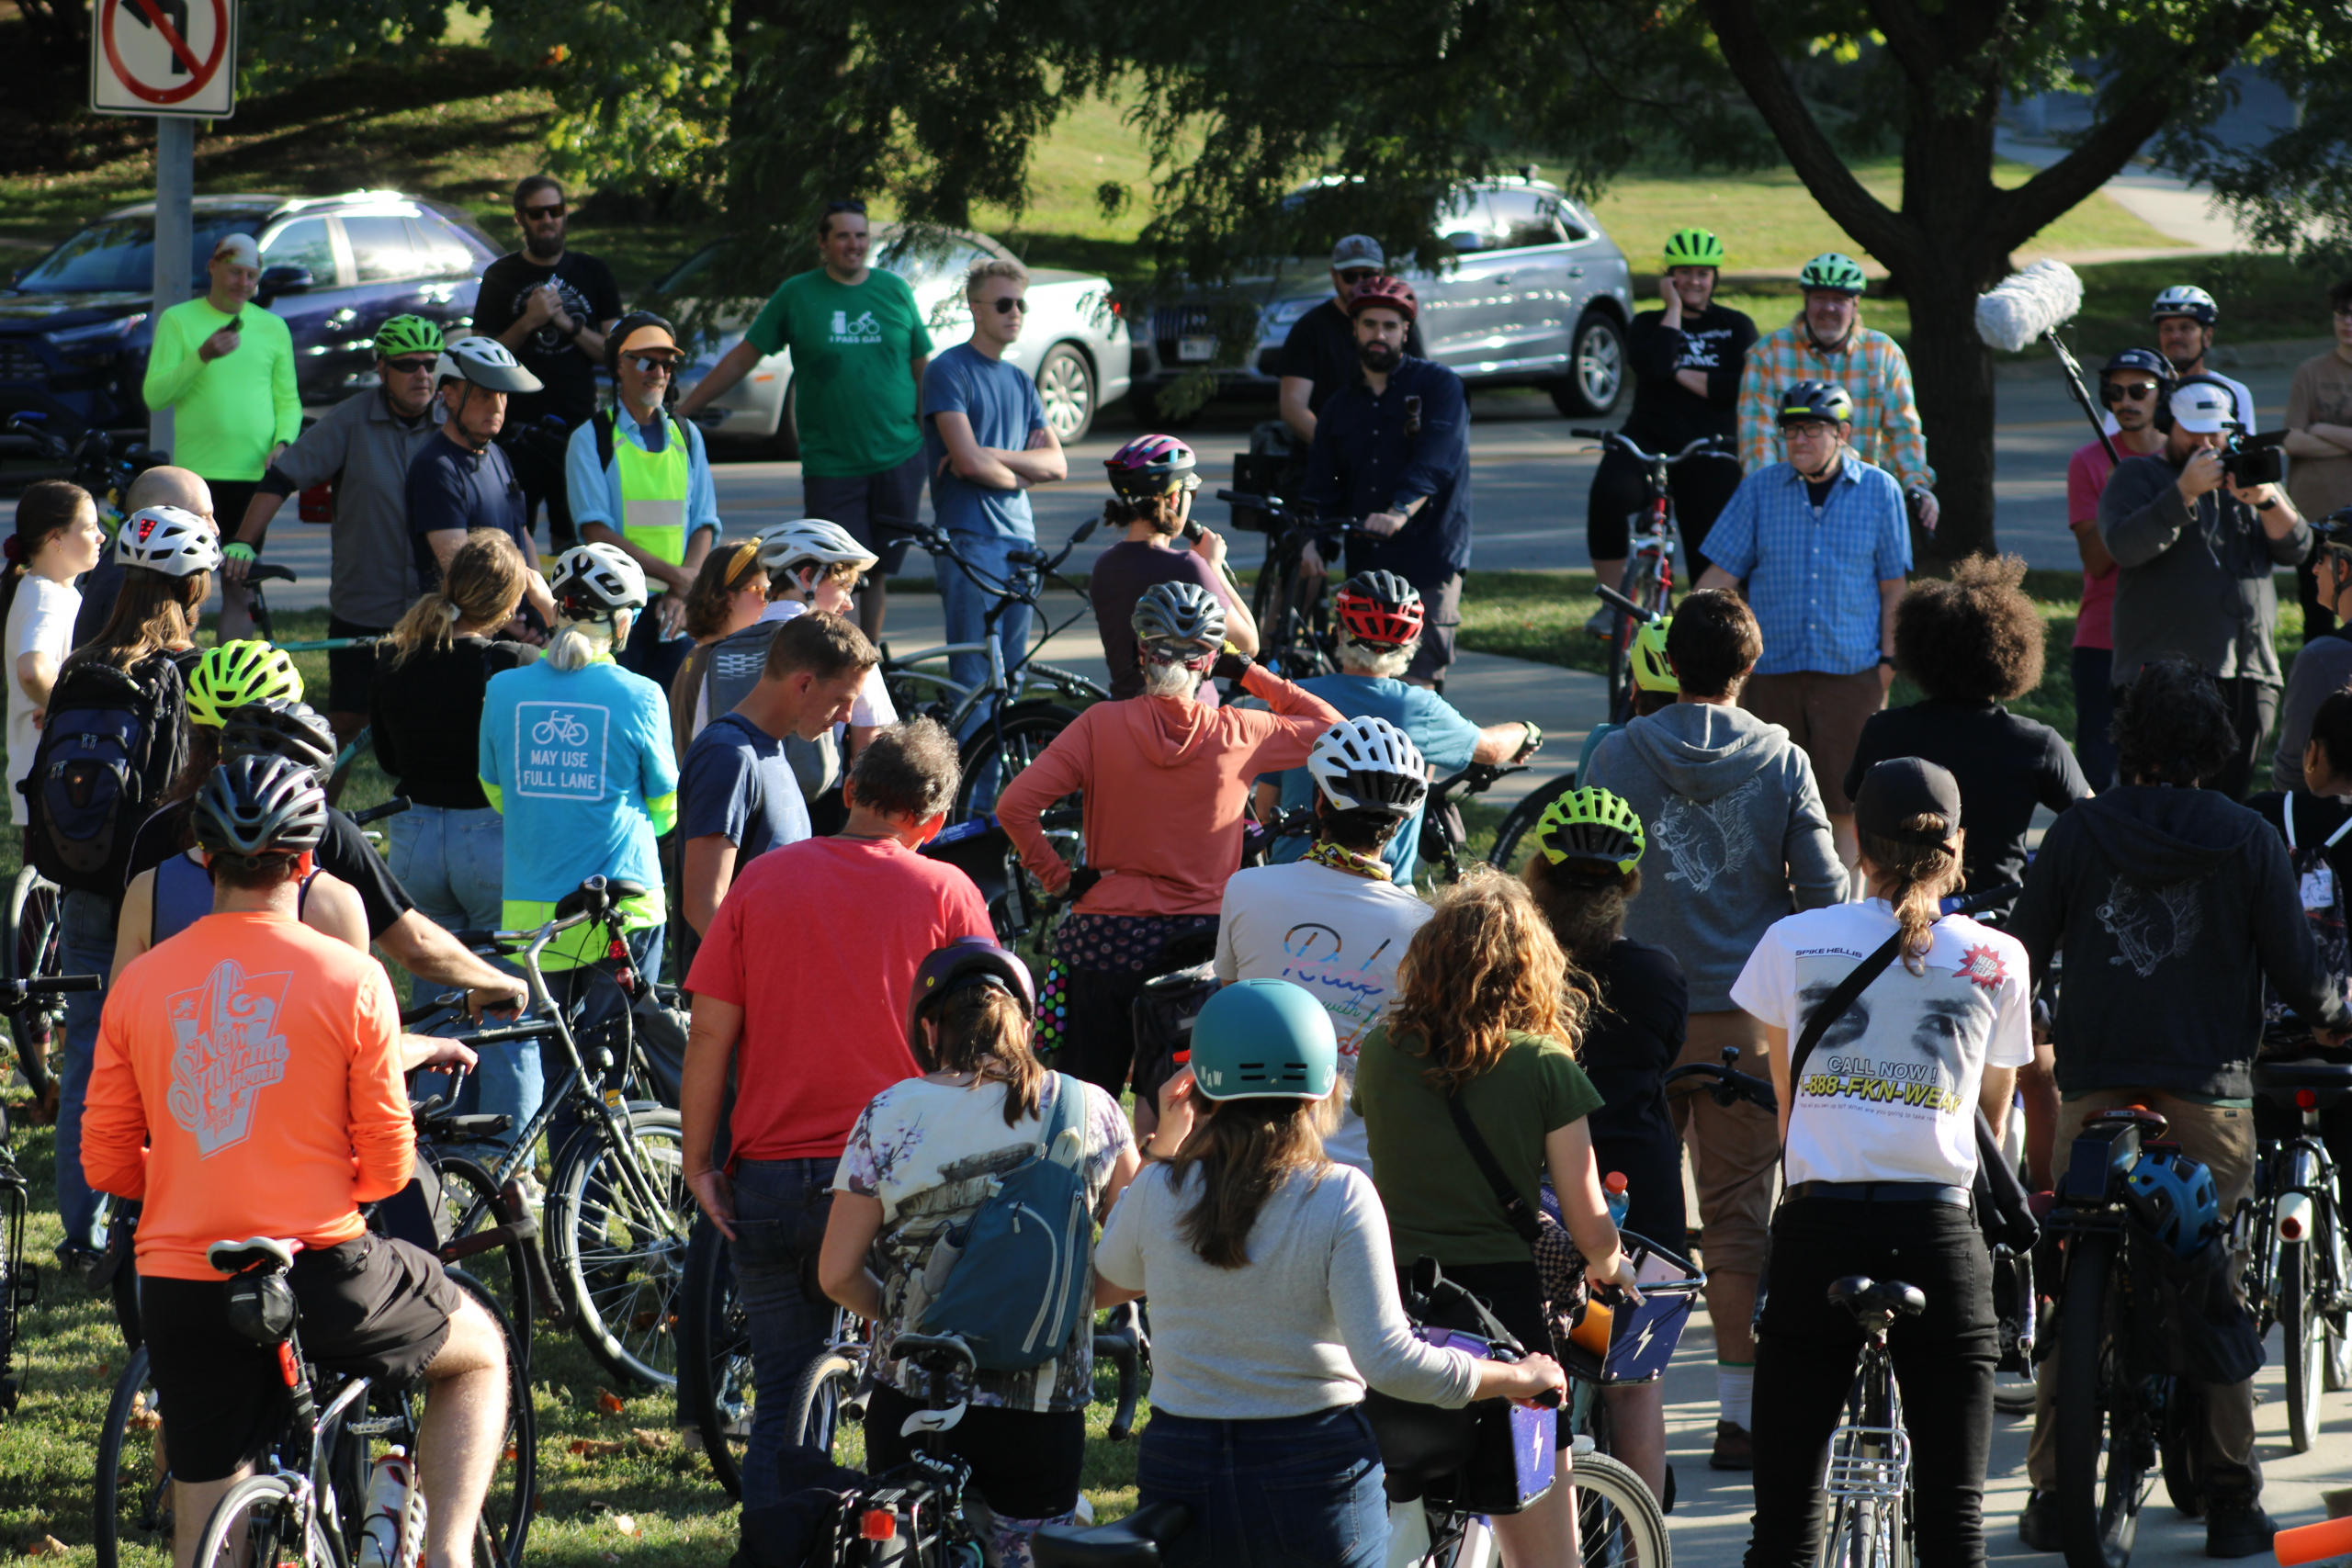 Third Annual Bike Swap & Expo: Get Deals on Bikes & Volunteer to help Mode Shift